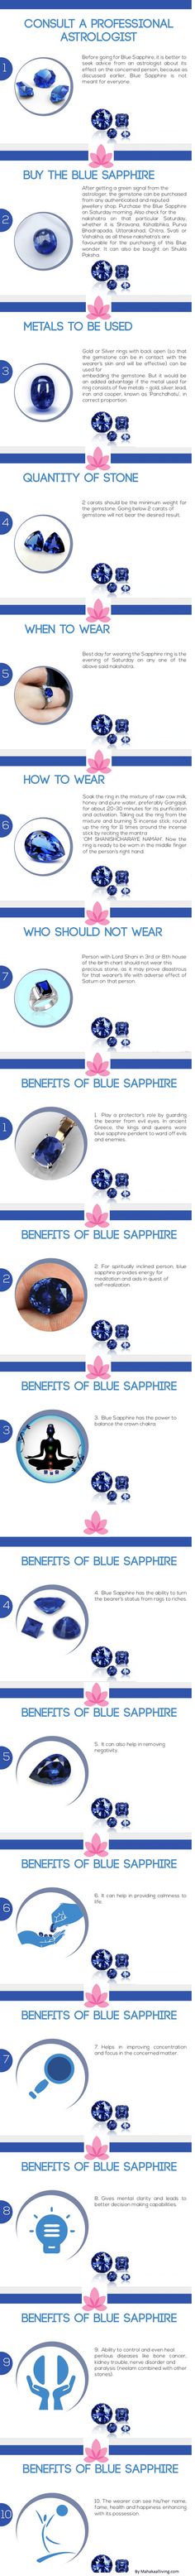 Blue Sapphire #Gemstone - #Astrological Effects & Benefits